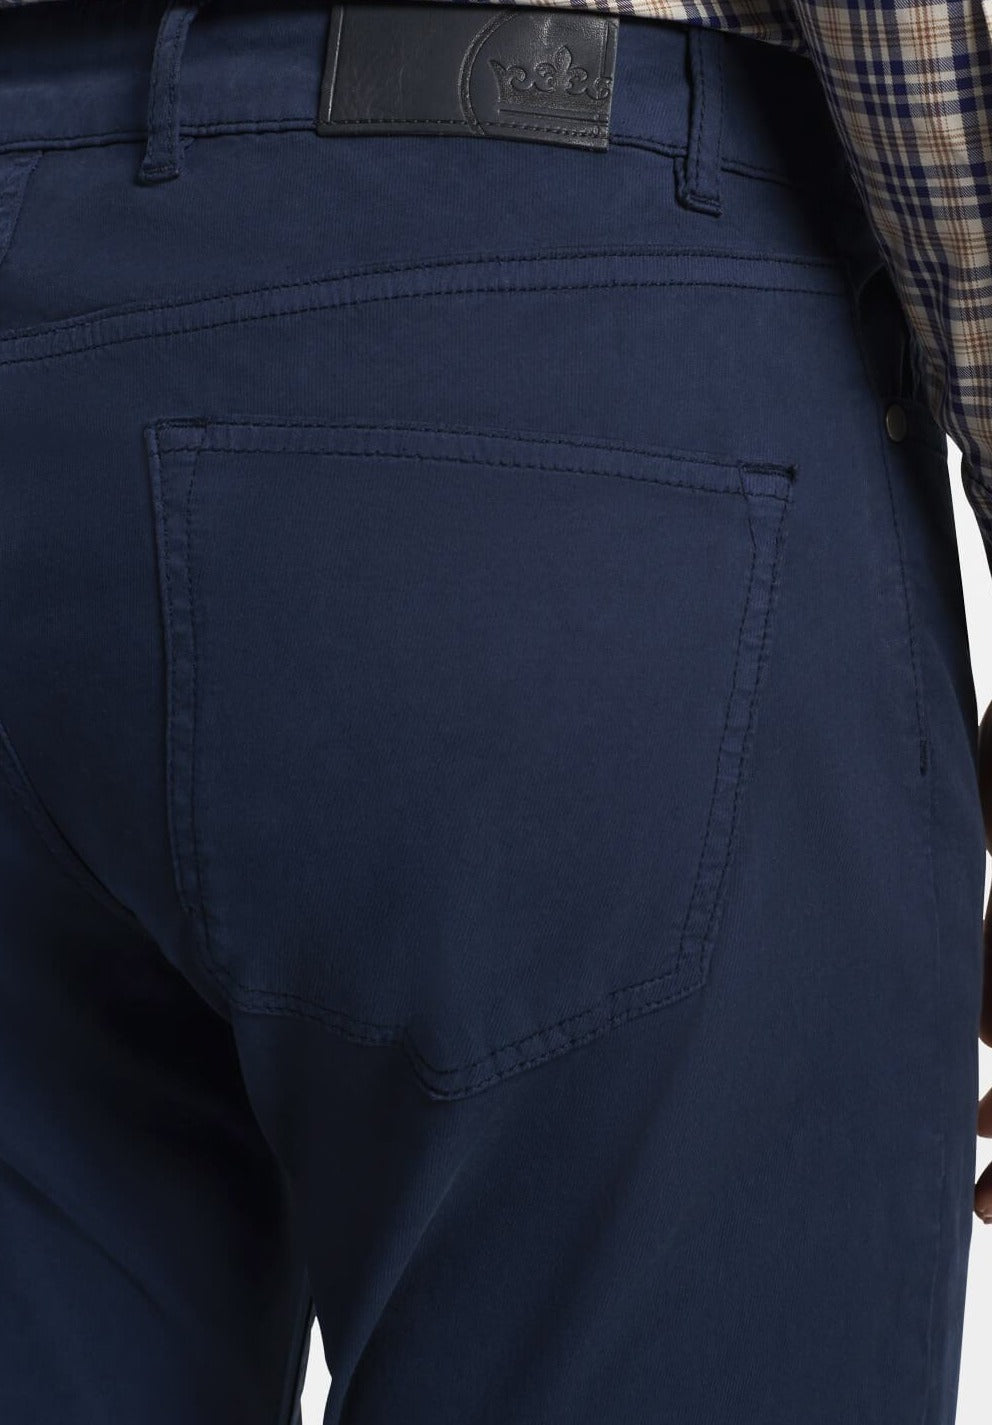 Peter Millar Collection 100% Wool 5 Pocket Pants NWT $278 35 x 34 Dark Grey